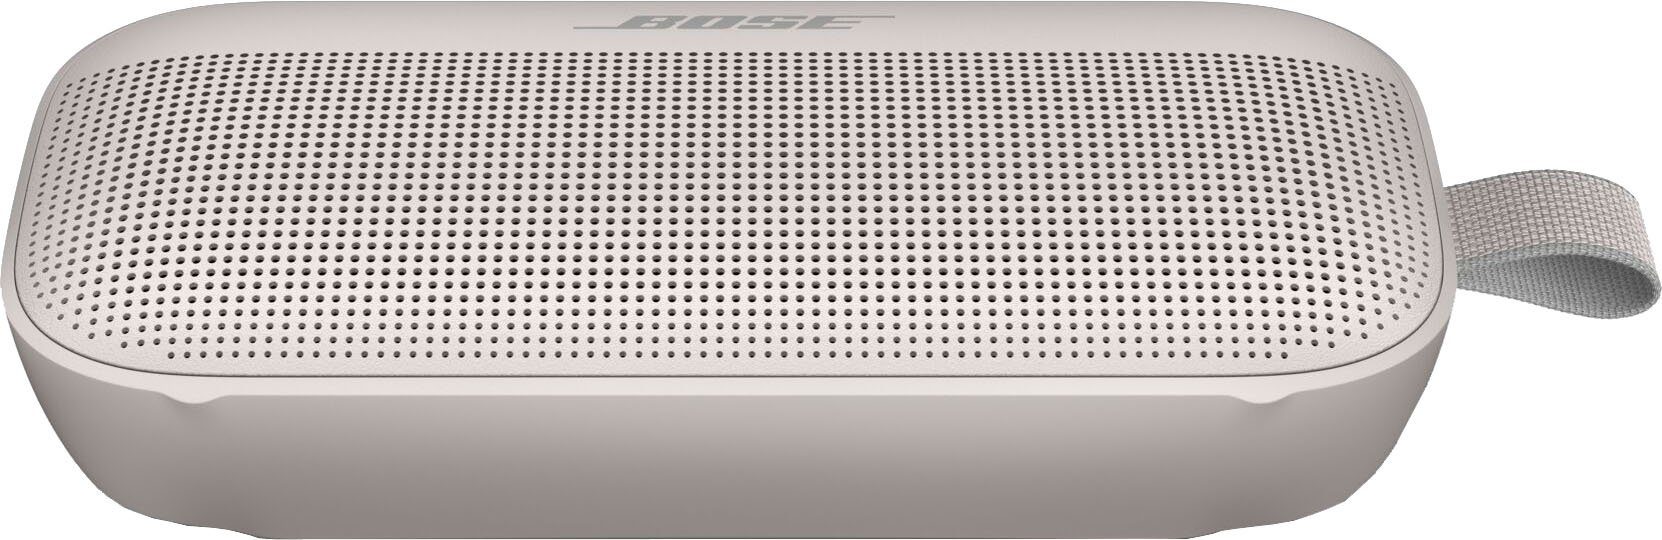 Bose (Bluetooth) Flex SoundLink Stereo Lautsprecher weiß